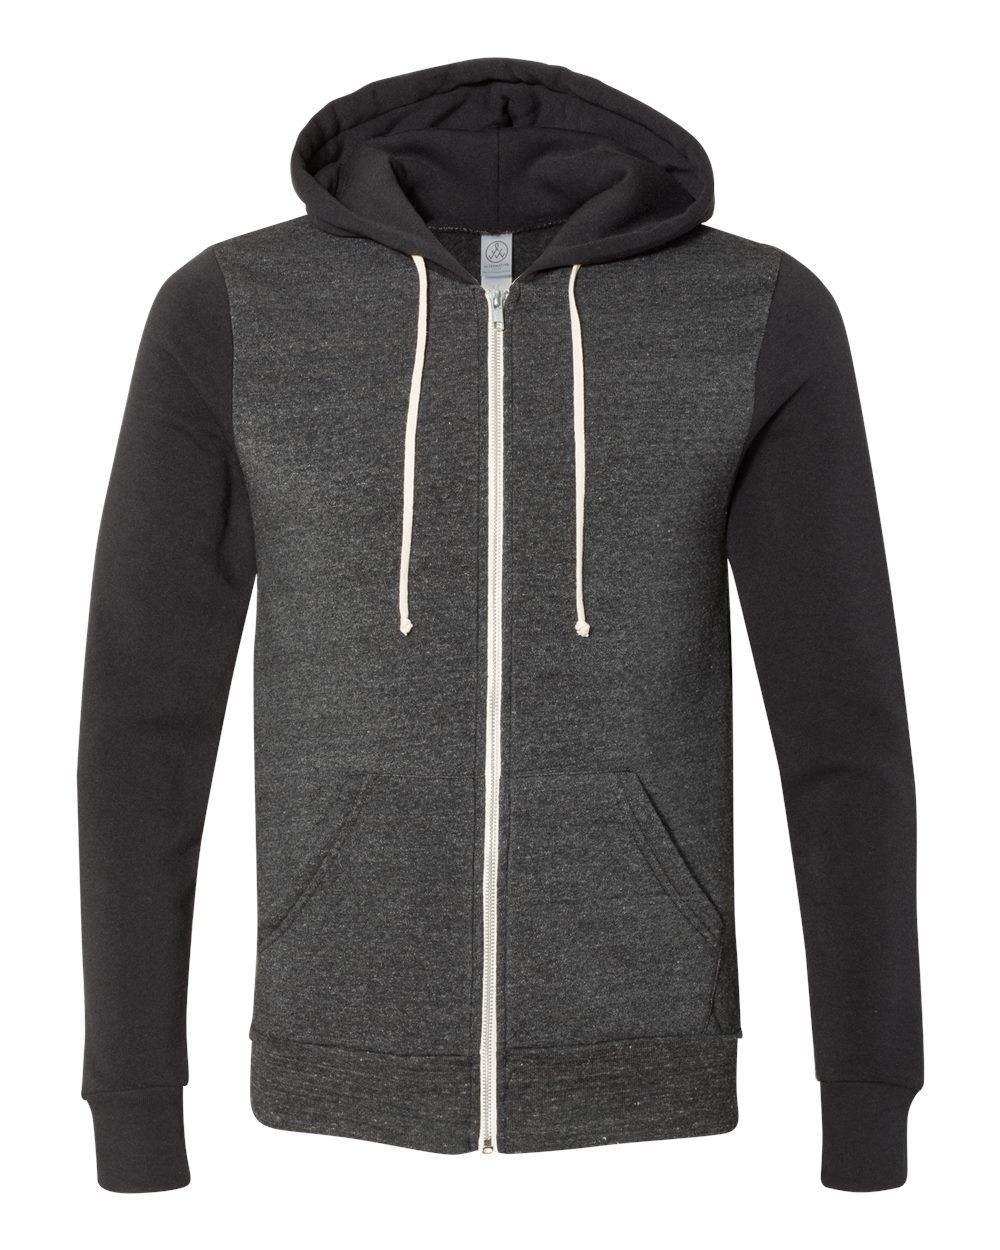 Full-Zips | Full Zips Wholesale | Full Zip Sweatshirts